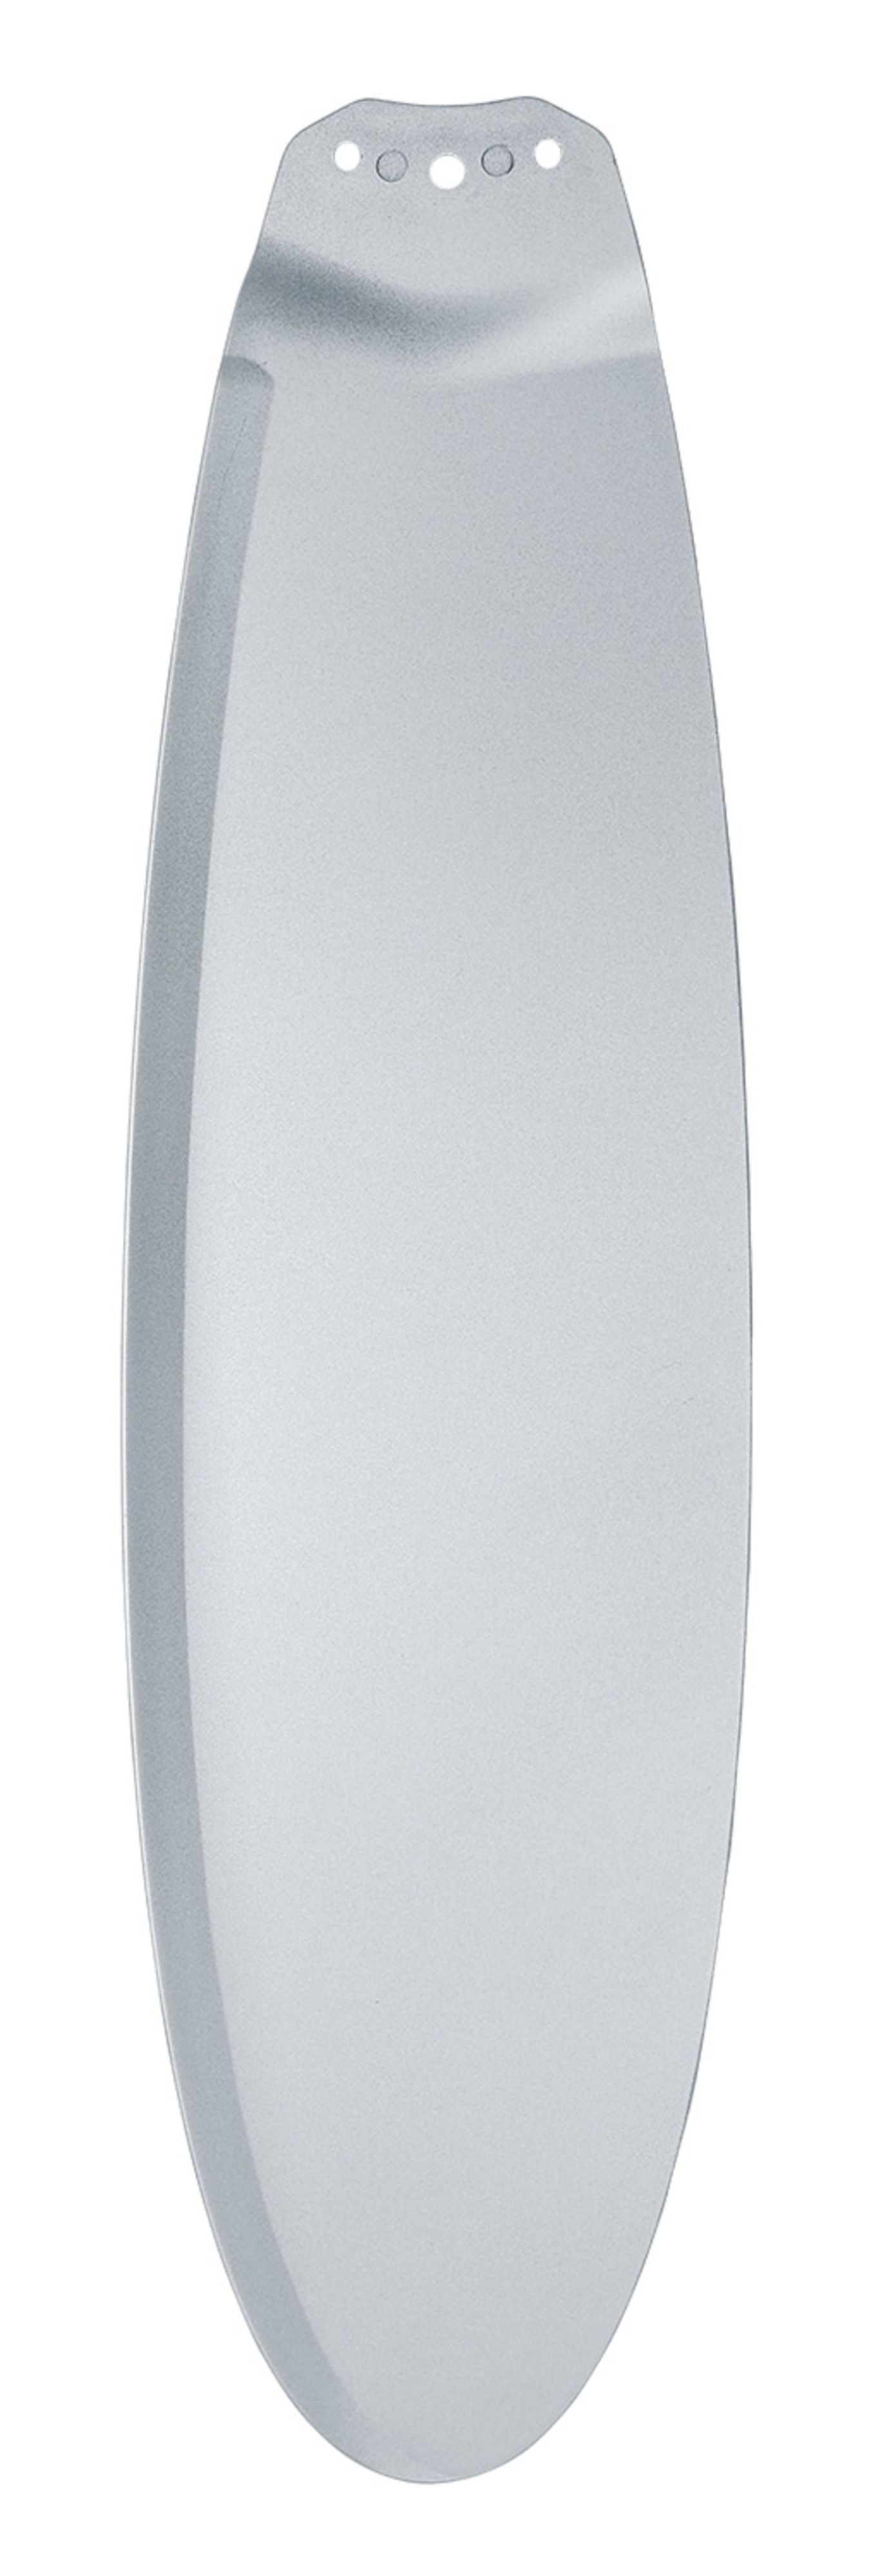 CASAFAN Grau / Plano Deckenventilator (28 Watt) II Silber LED Eco